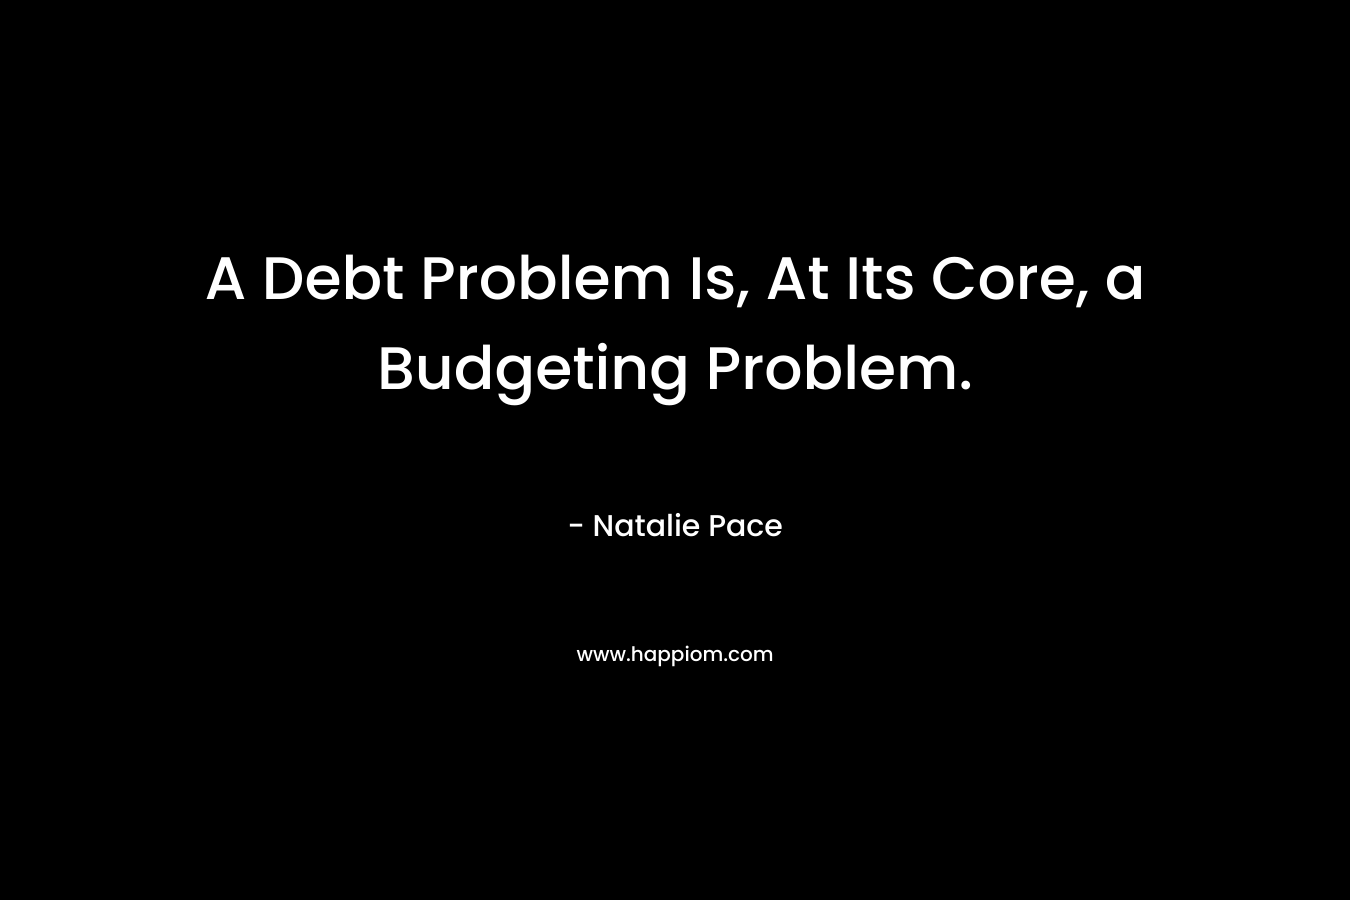 A Debt Problem Is, At Its Core, a Budgeting Problem.